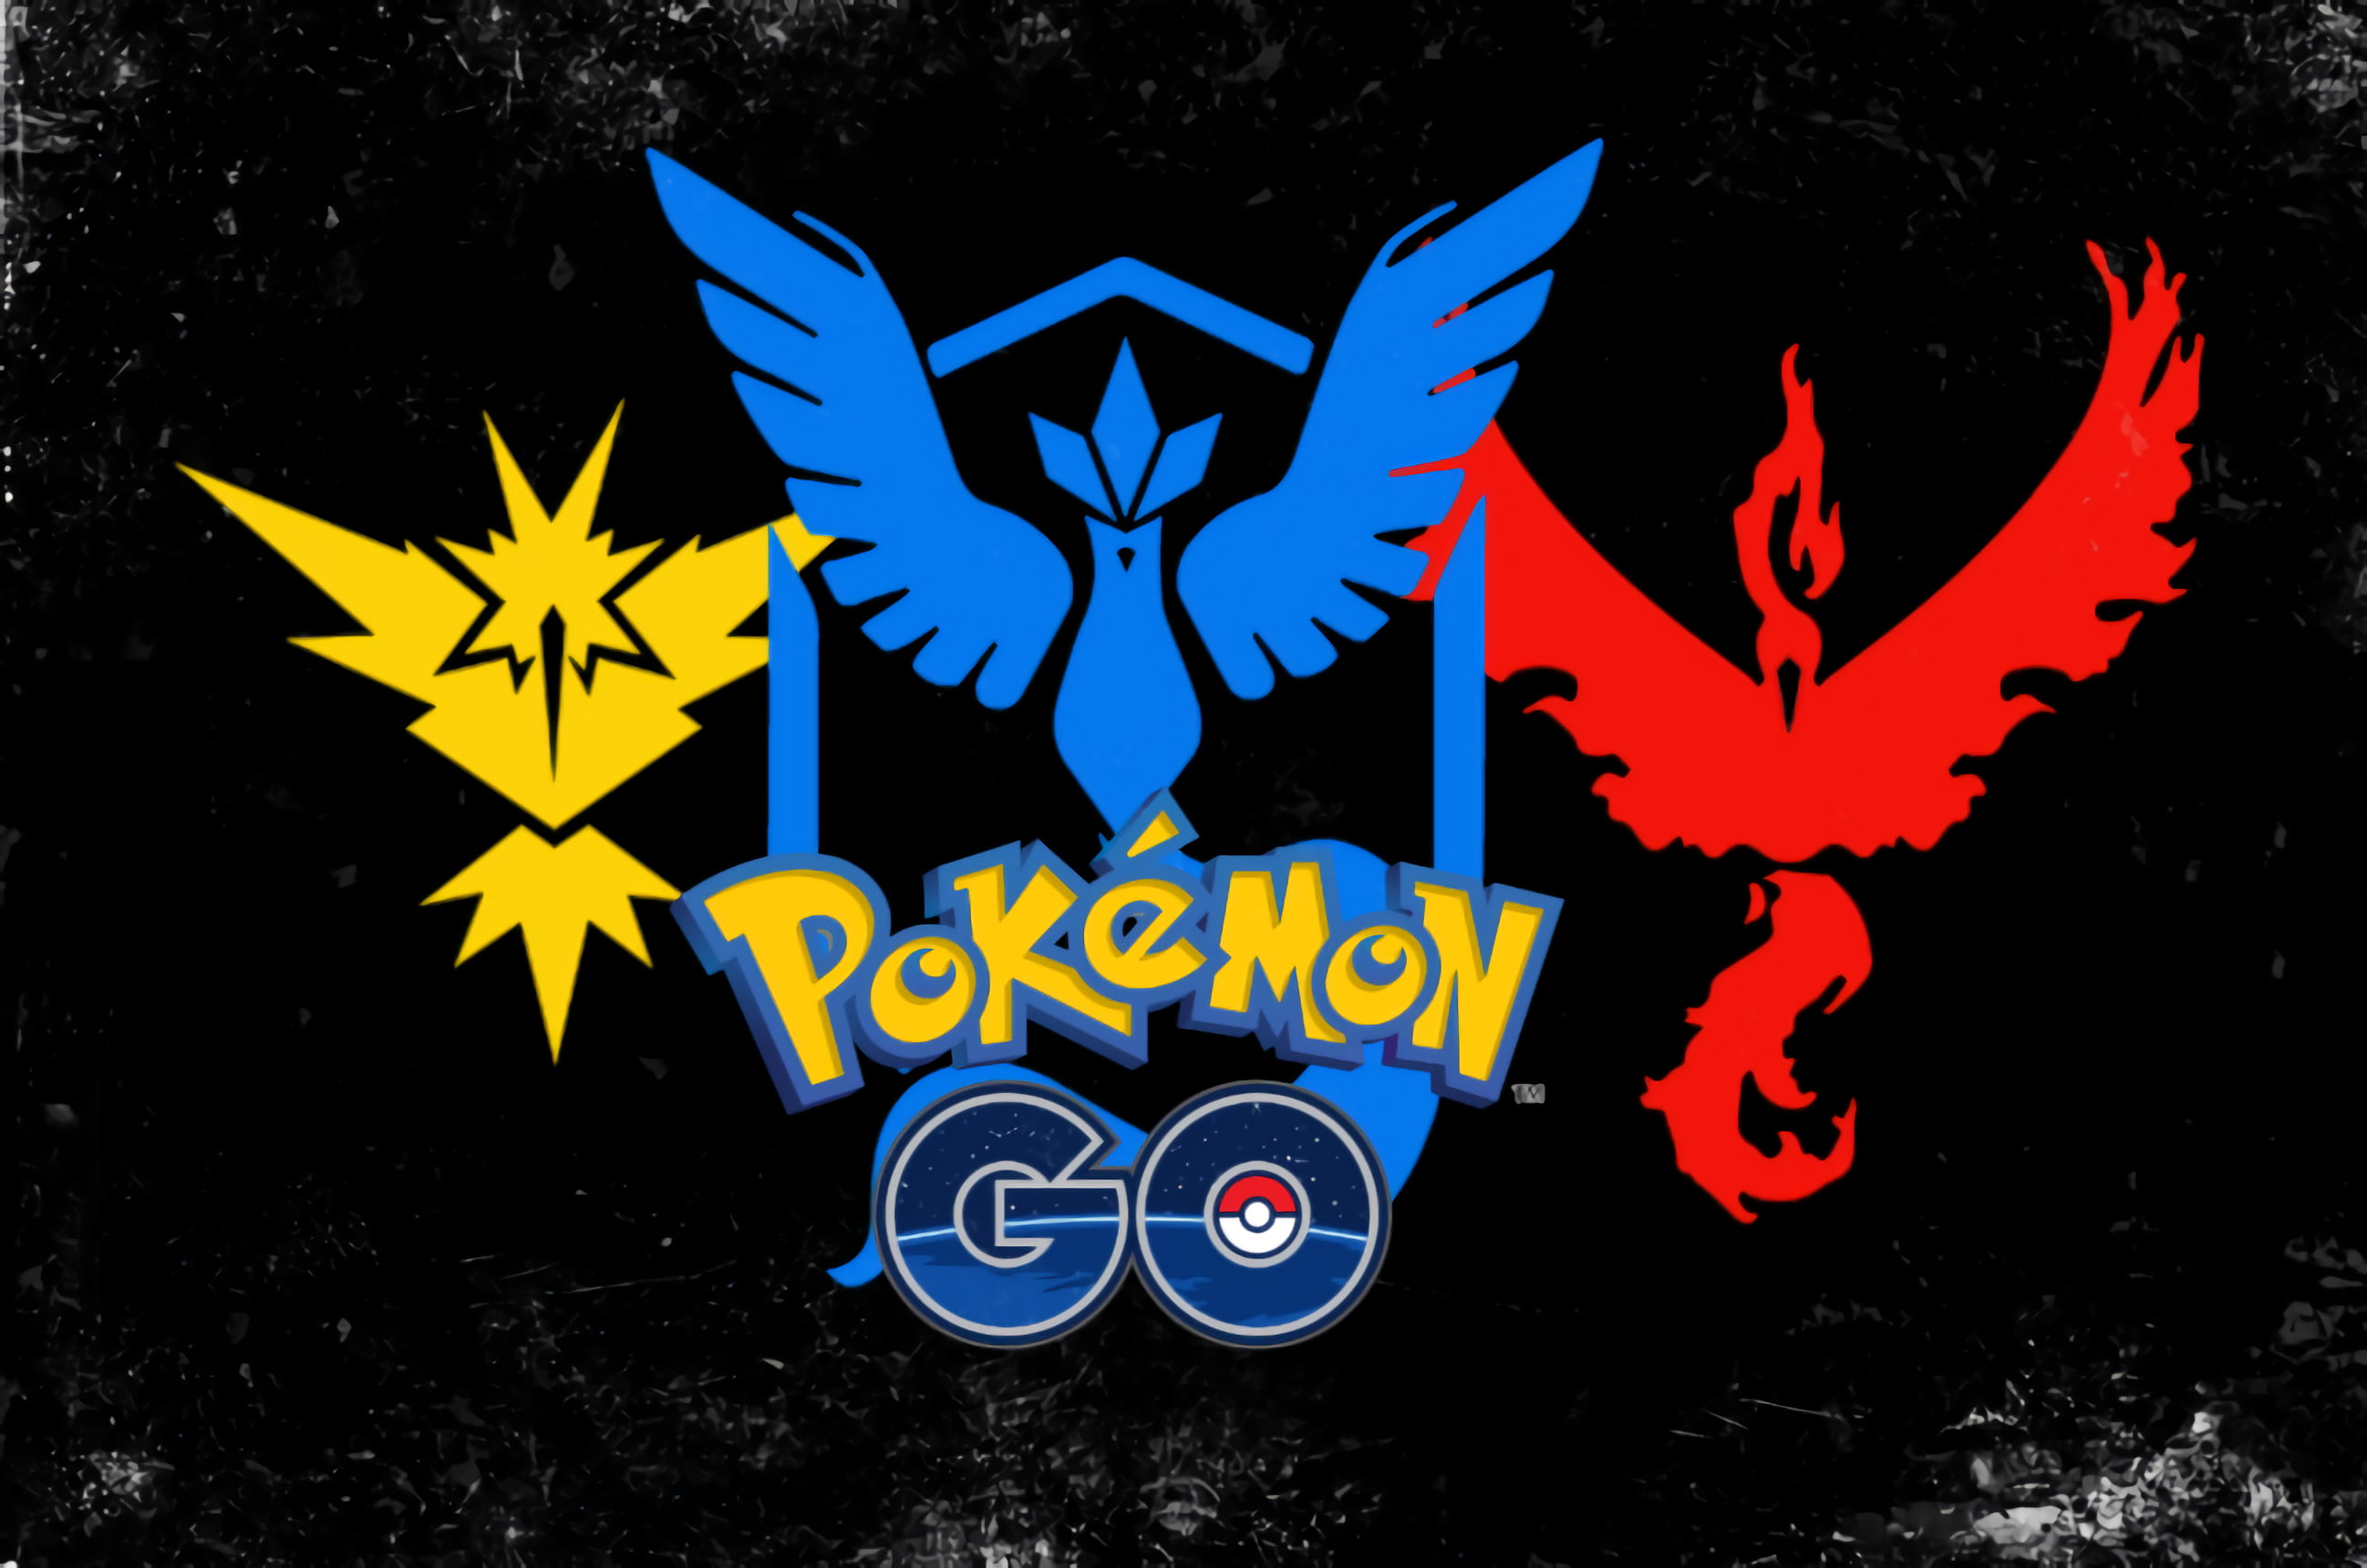 Pokemon Go logo